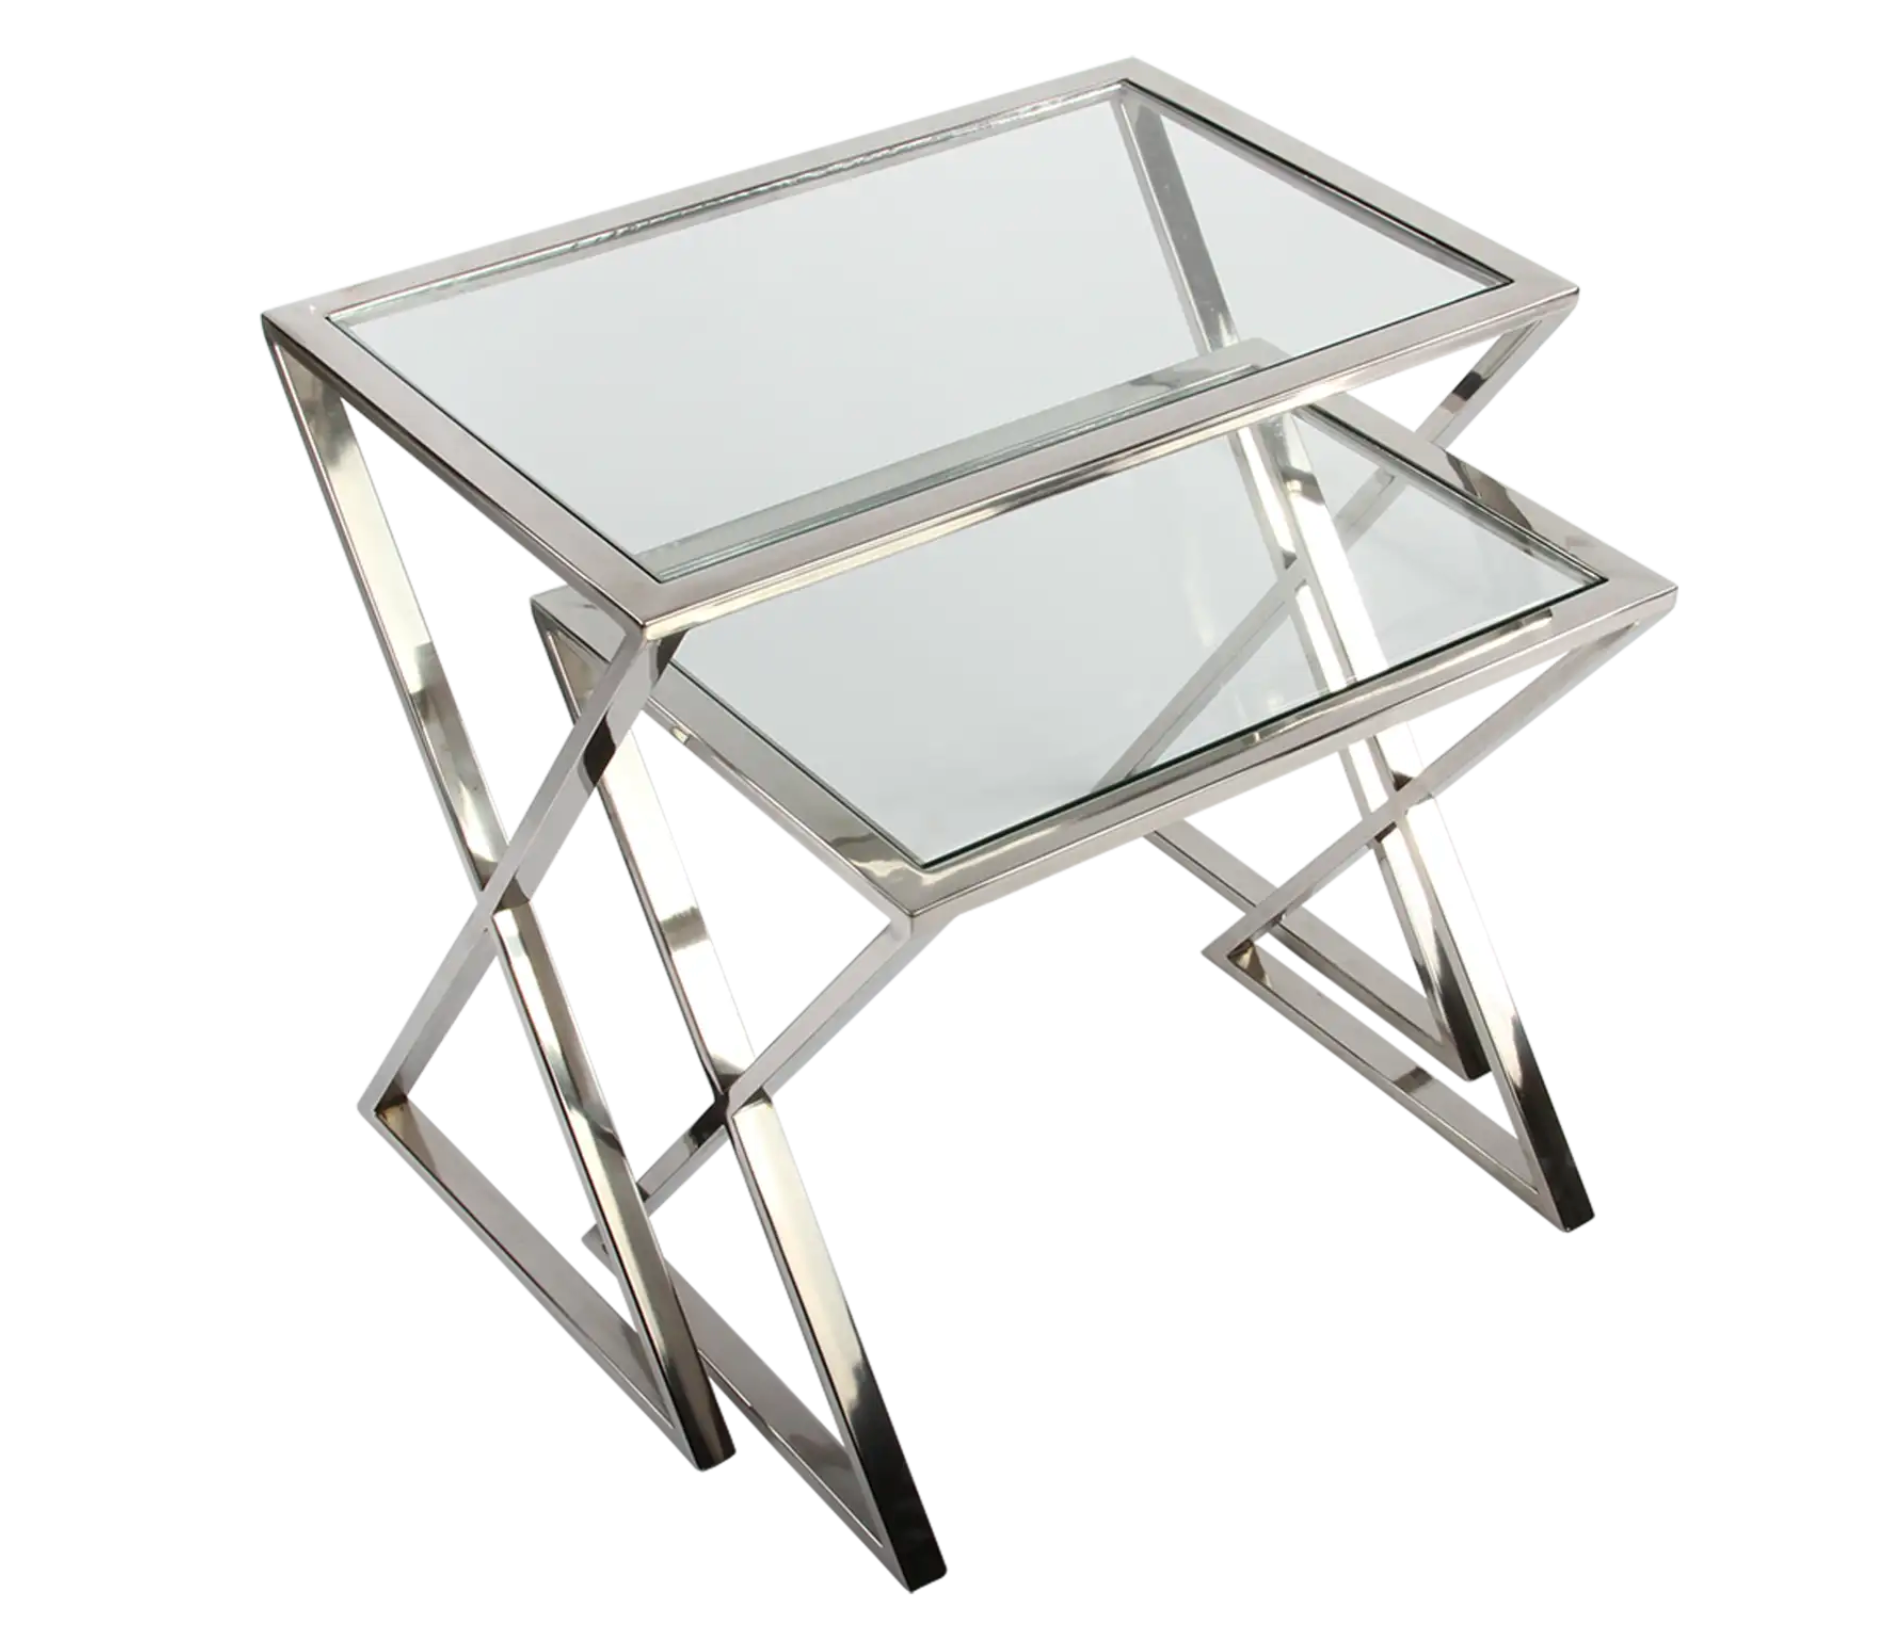 Small silver tables 50 x 35 x 45 cm / 60 x 40 x 55 cm